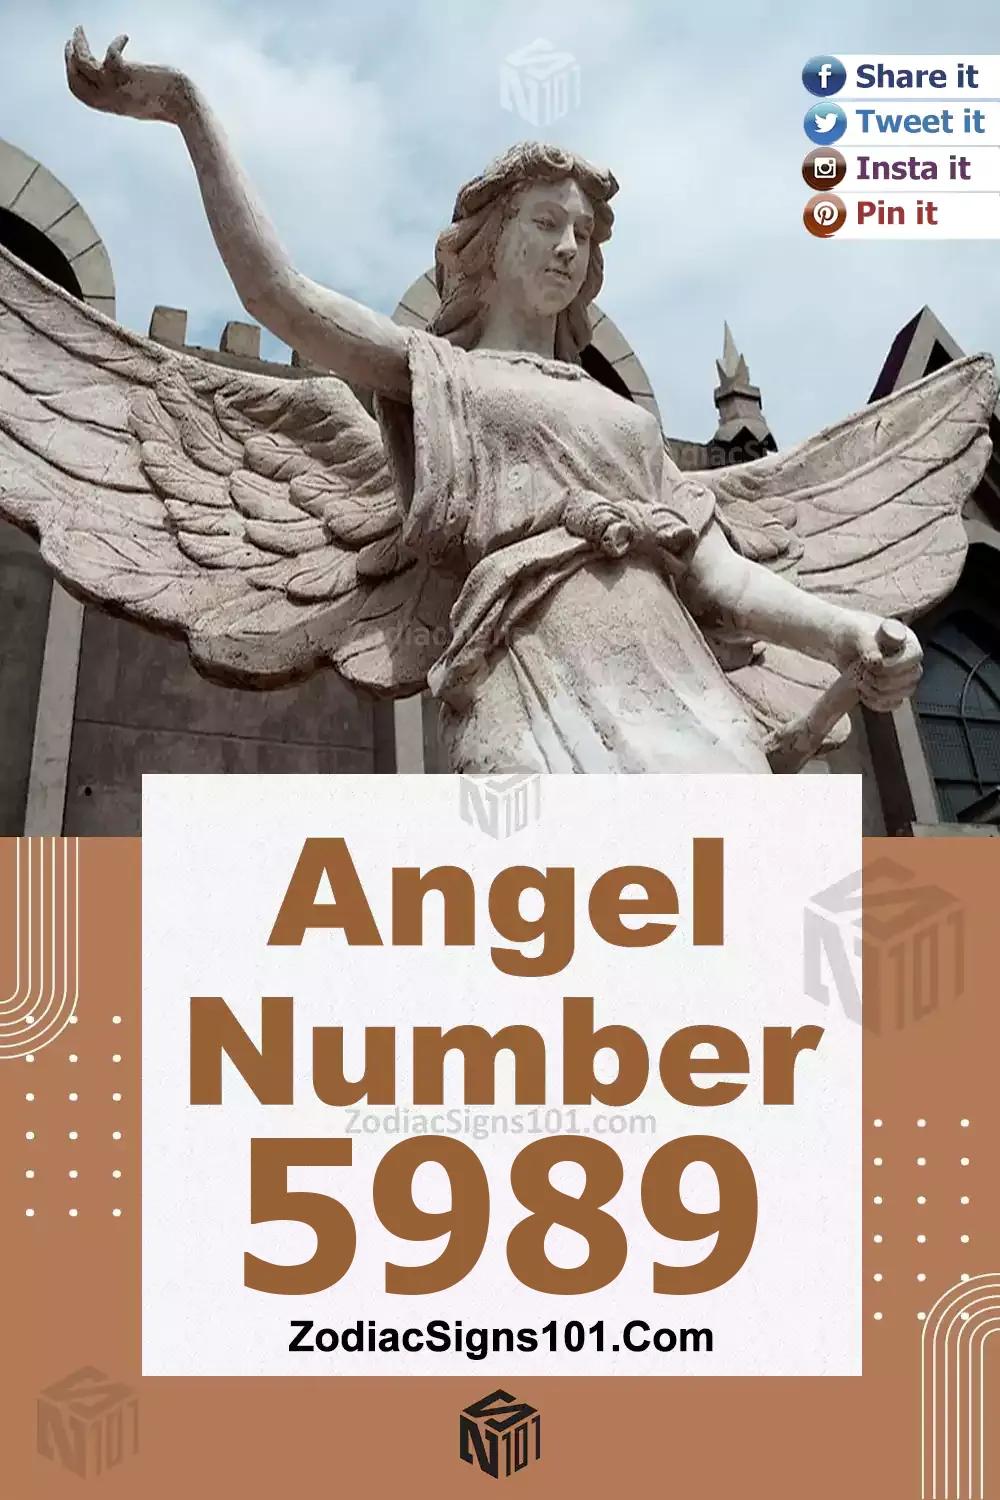 5989-Angel-Number-Meaning.jpg